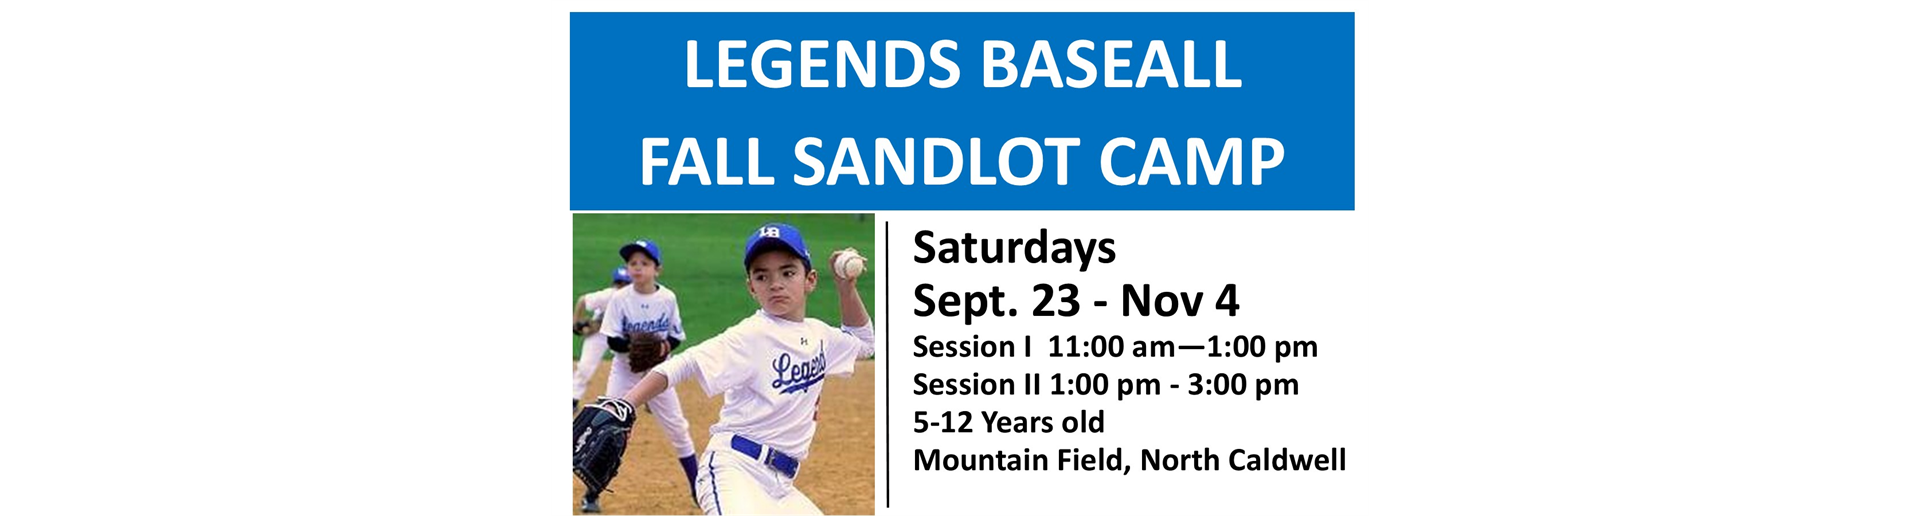 Legends Baseball Sandlot Saturday Camp